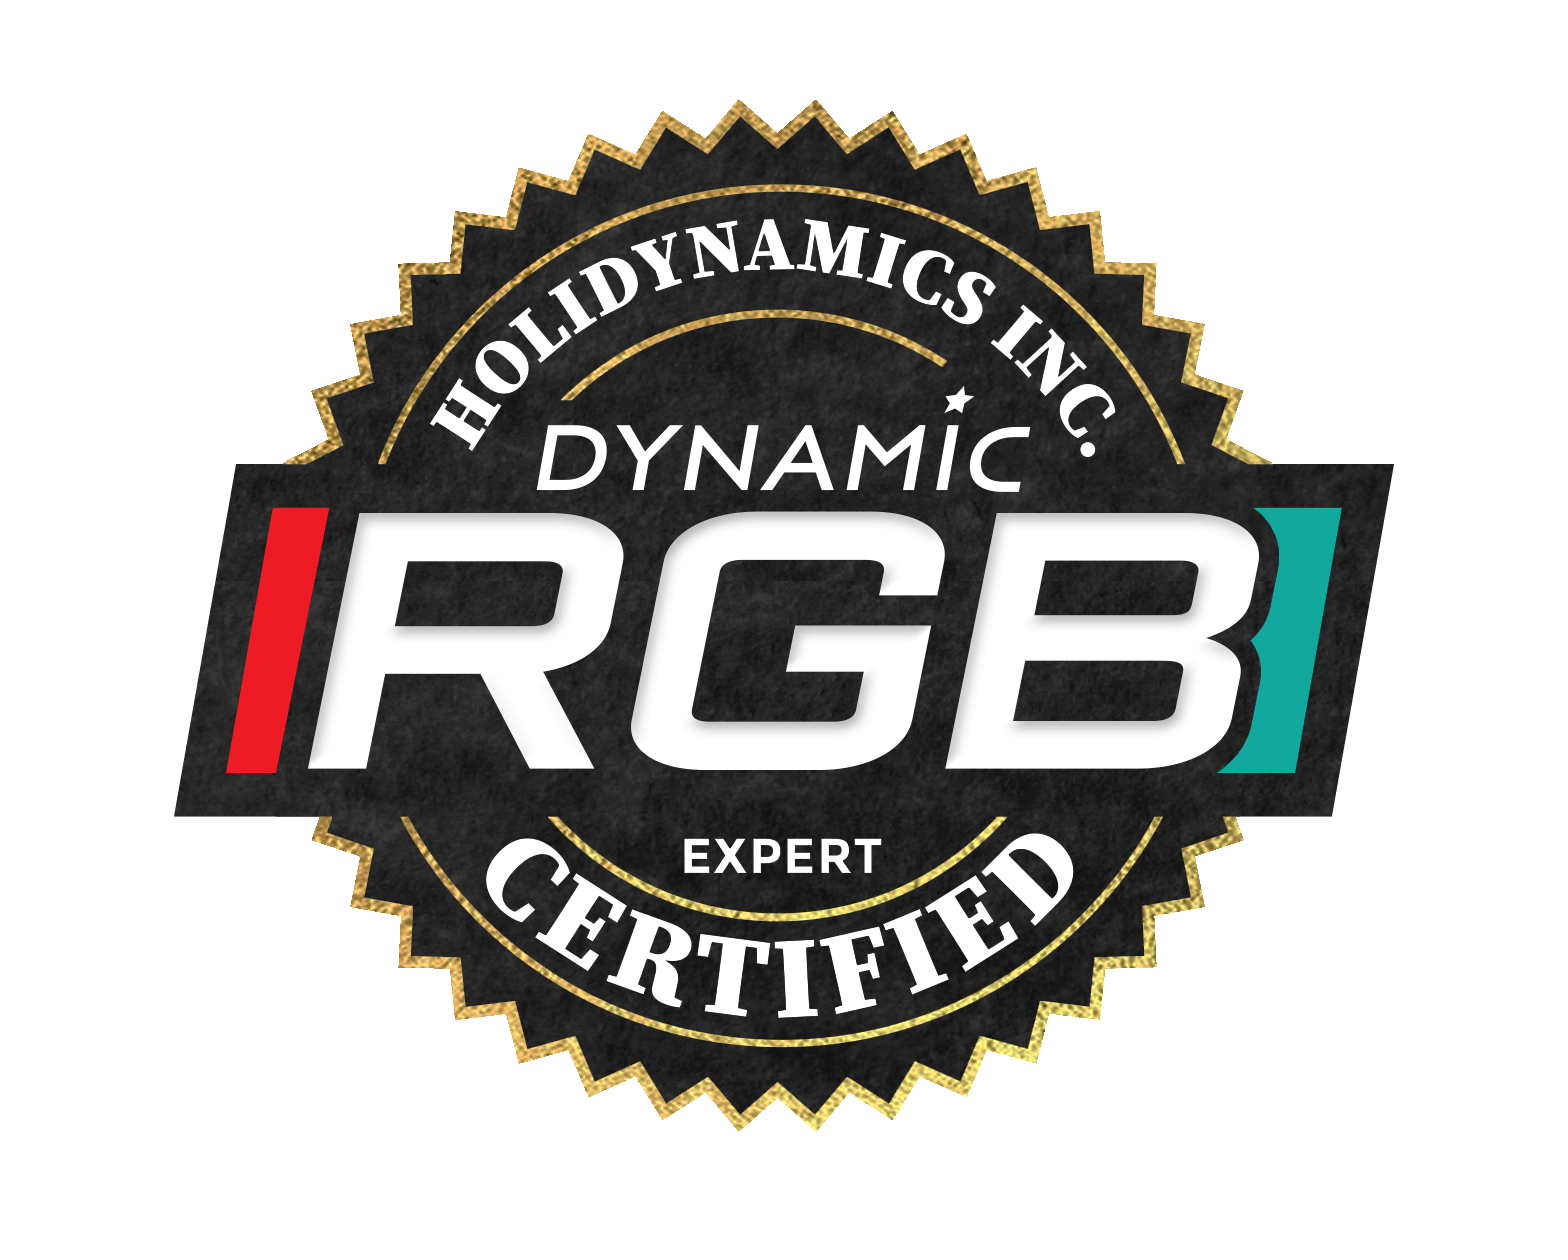 Holidynamics Inc - Dynamic RGB Certified Expert